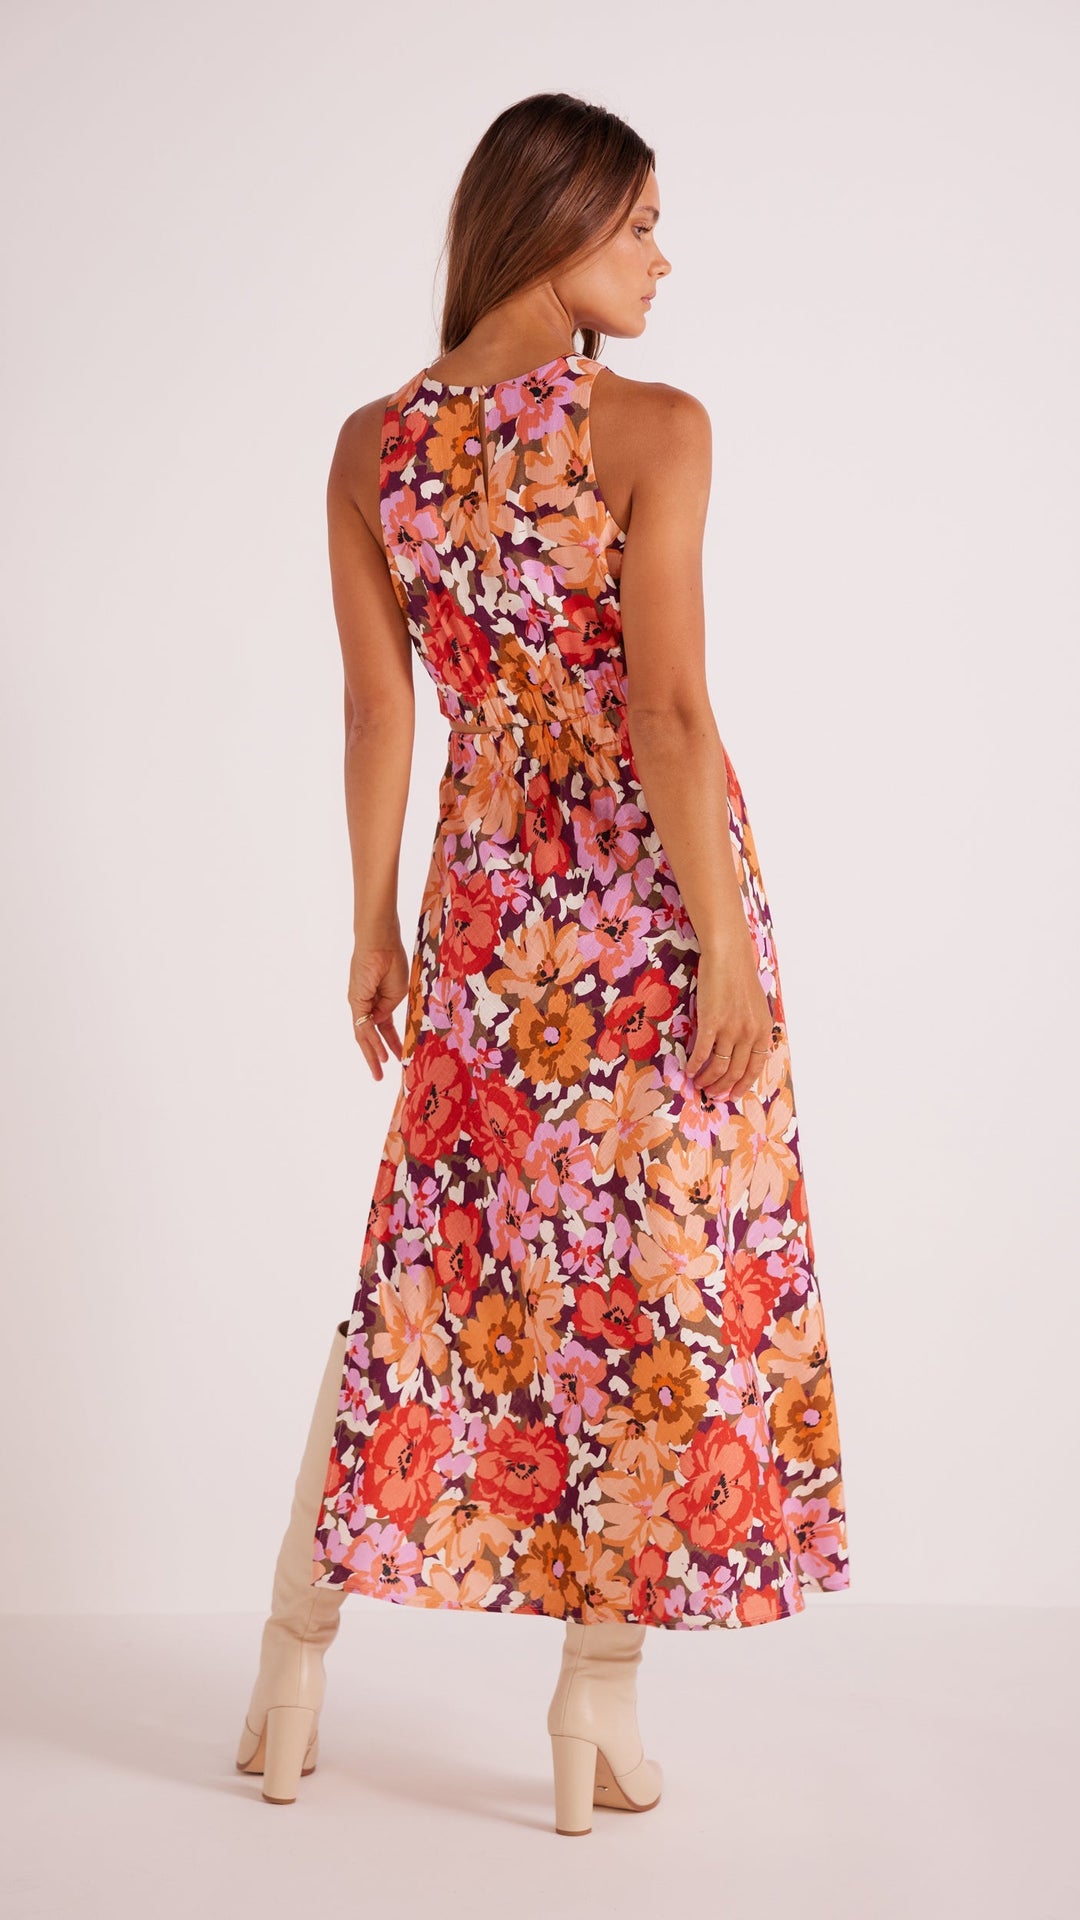 zanita cut-out midi dress by minkpink in floral print. Sleeveless. Fall23. JOlie folie boutique.